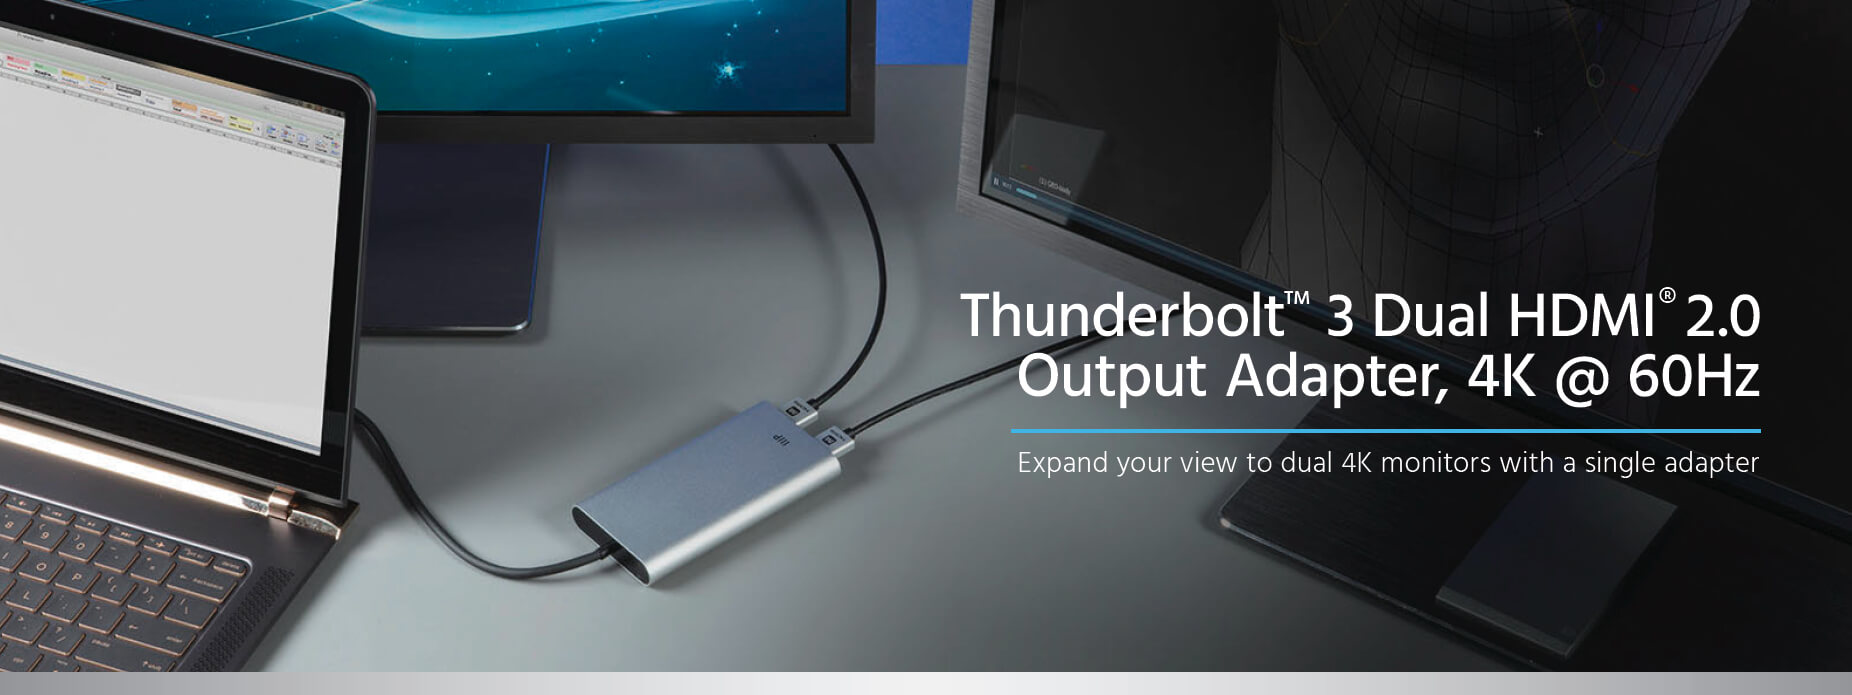 Thunderbolt Dual HDMI Adapter